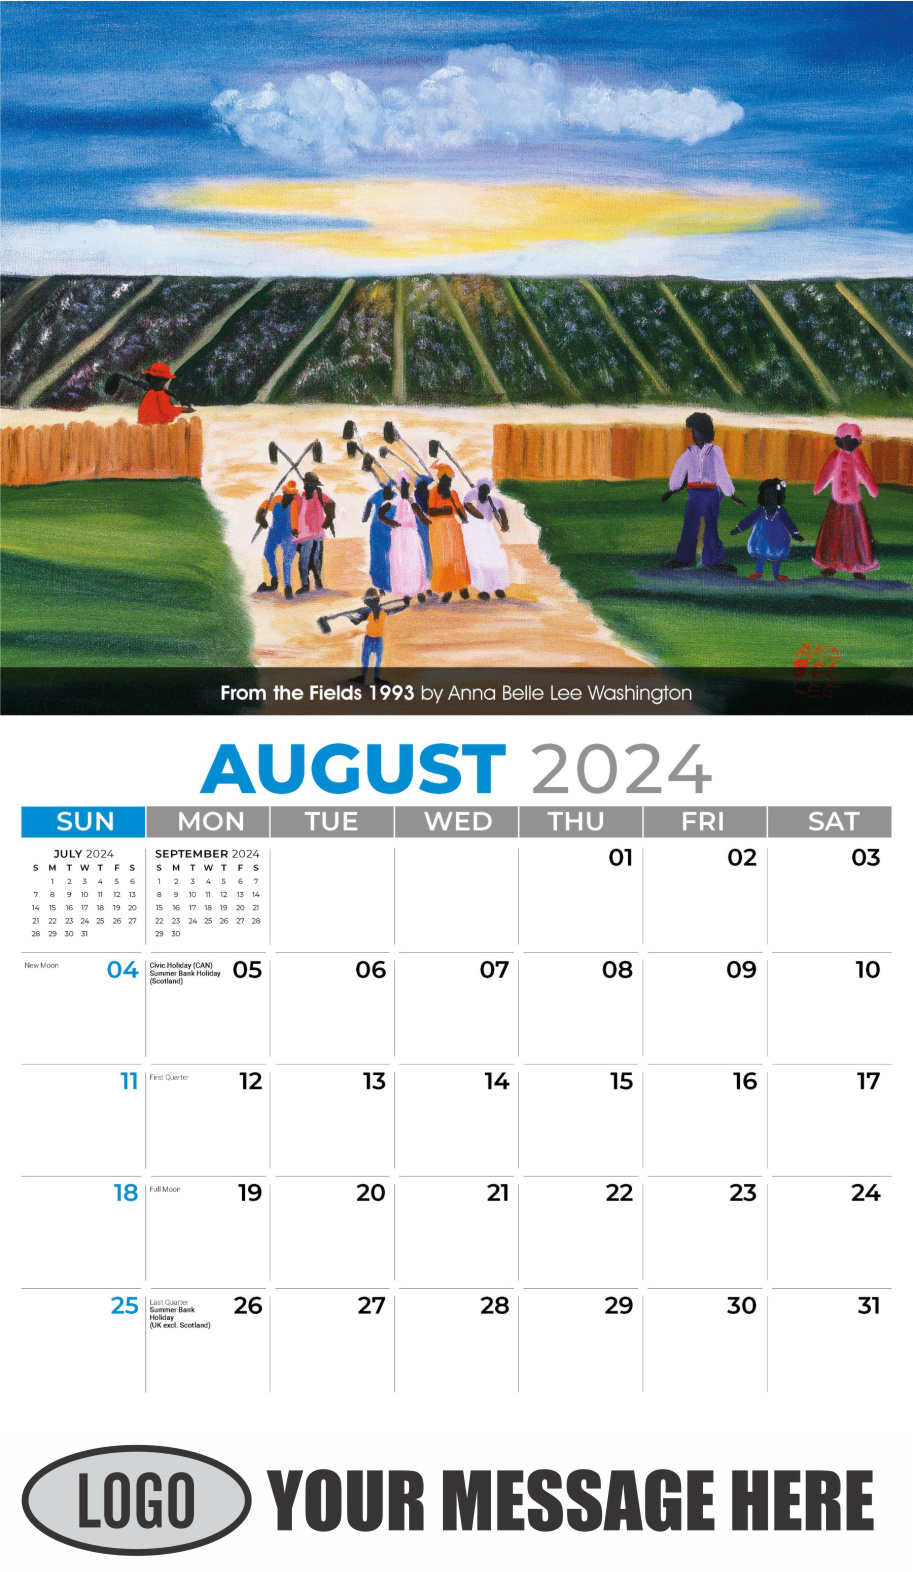 Celebration of African American Art 2024 Business Promotional Calendar - August